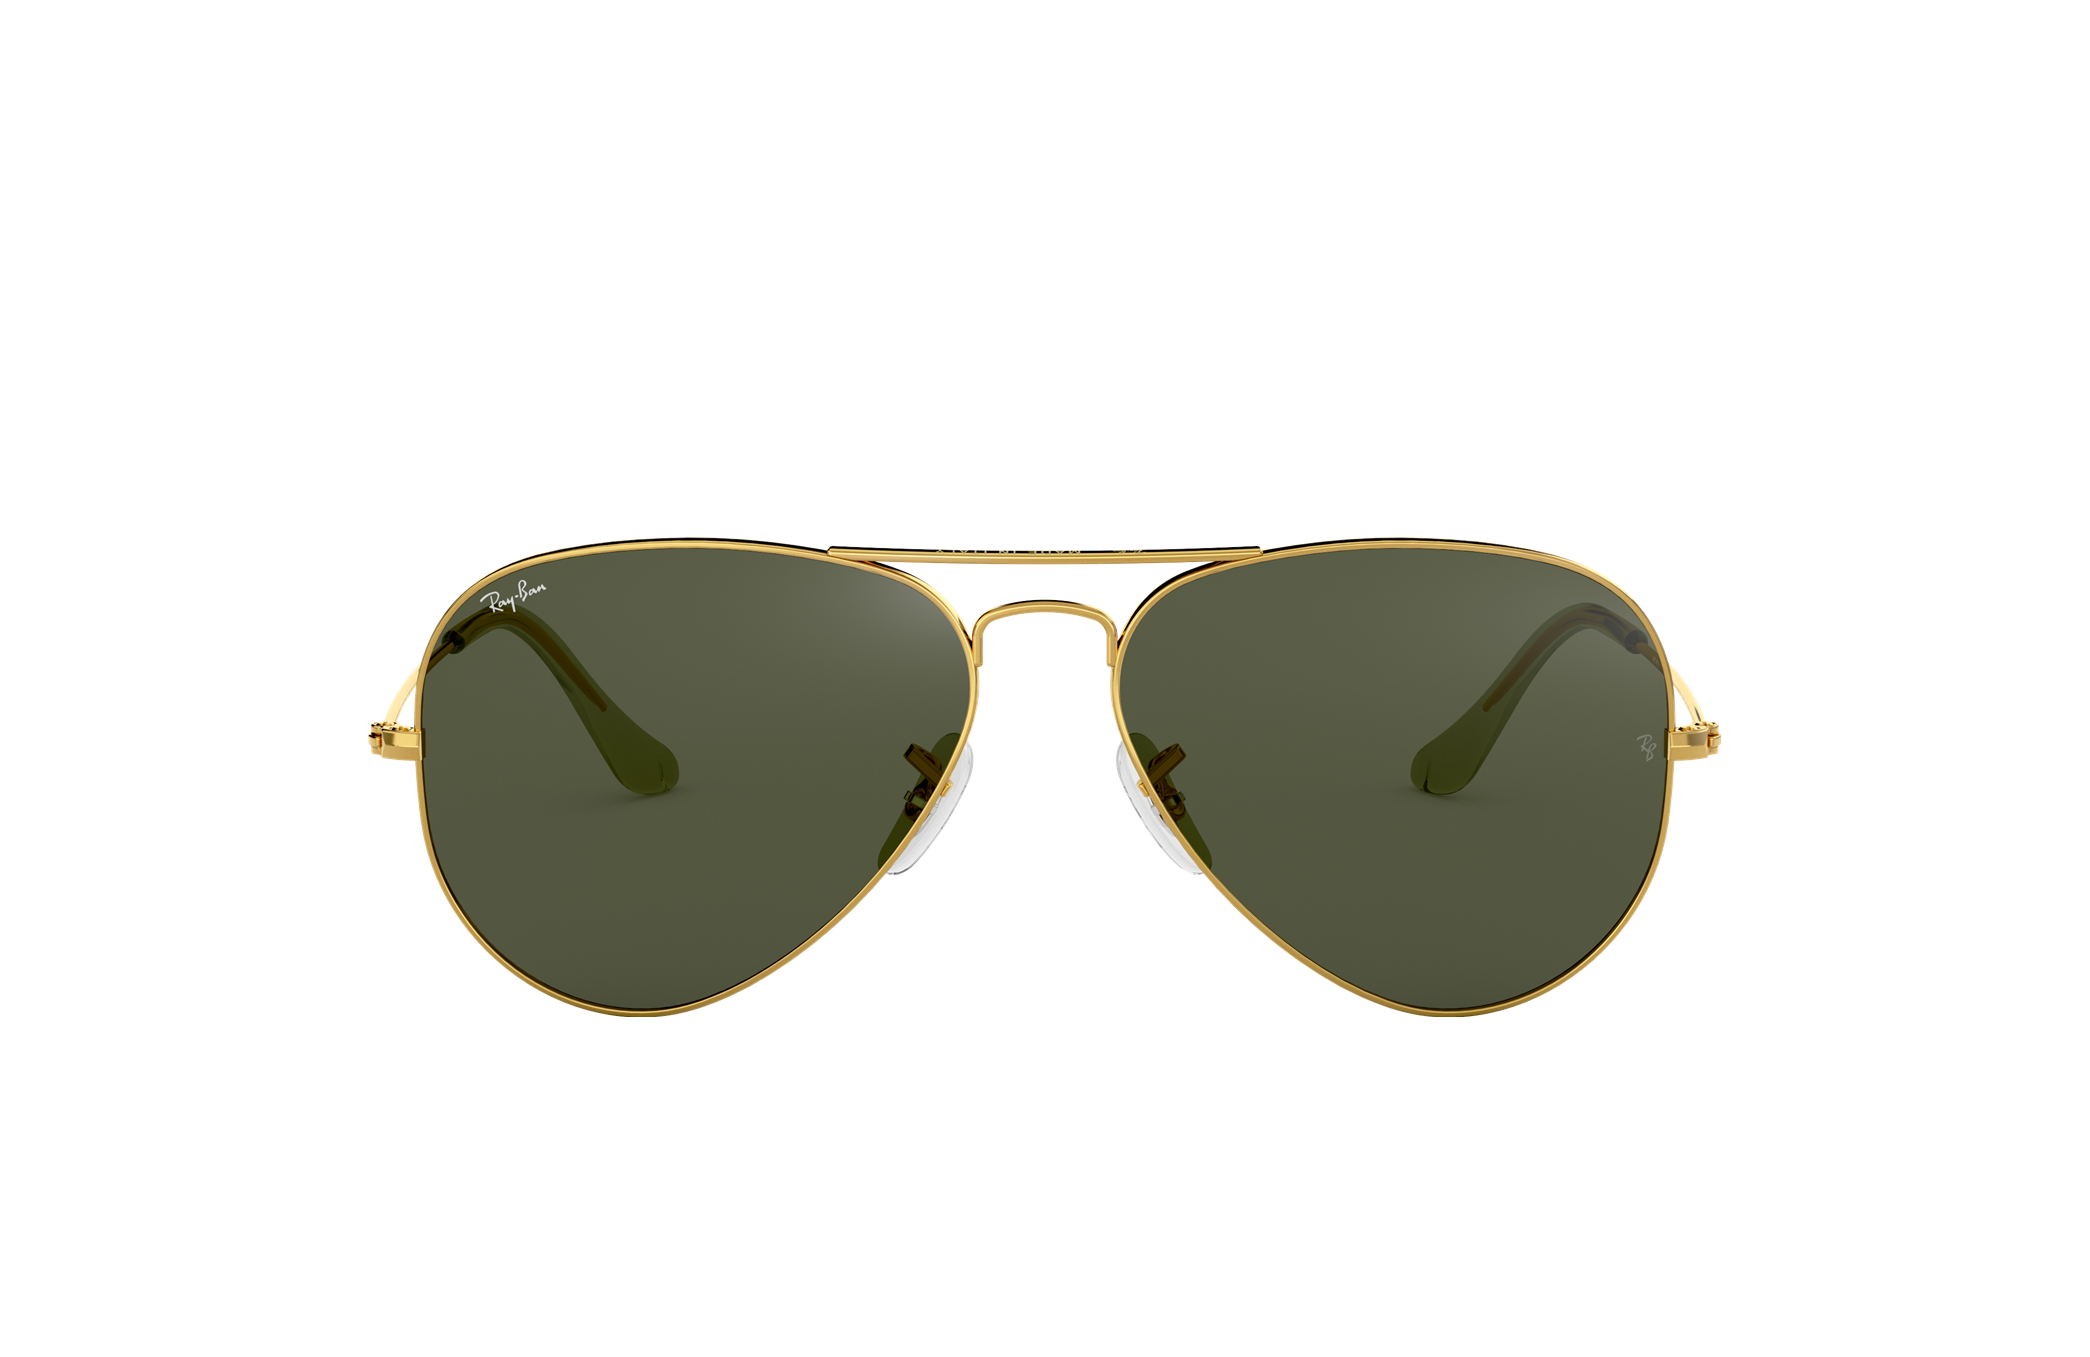 Accessories Sunglasses Aviator Glasses Ray Ban Aviator Glasses gold-colored casual look 